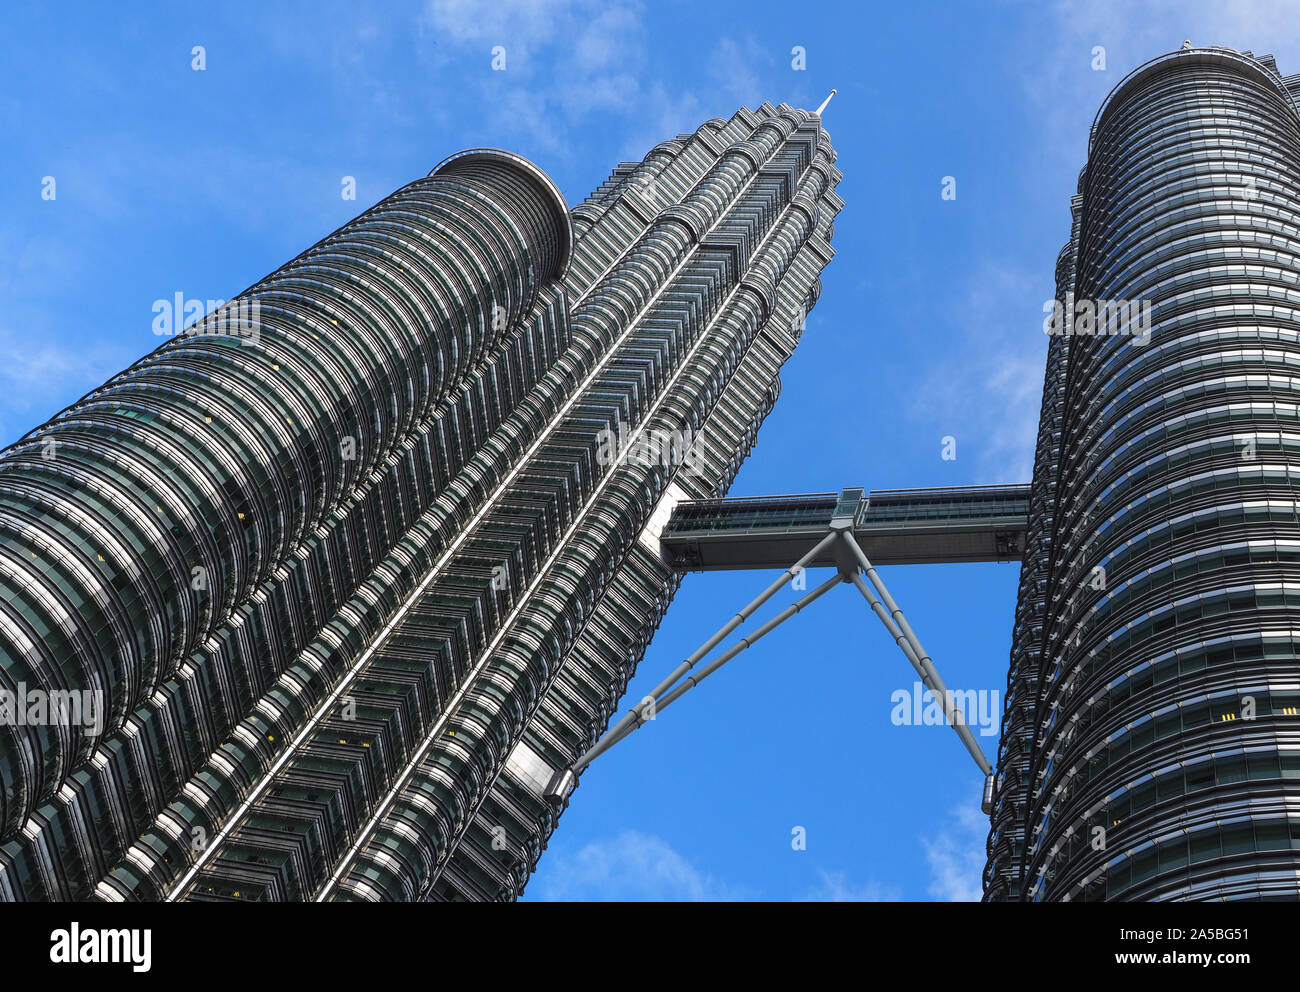 Petronas Twin Towers Sky Bridge, il ponticello del cielo sul quarantaduesimo pavimento della Petronas Twin Towers, Kuala Lumpur, Malesia Foto Stock